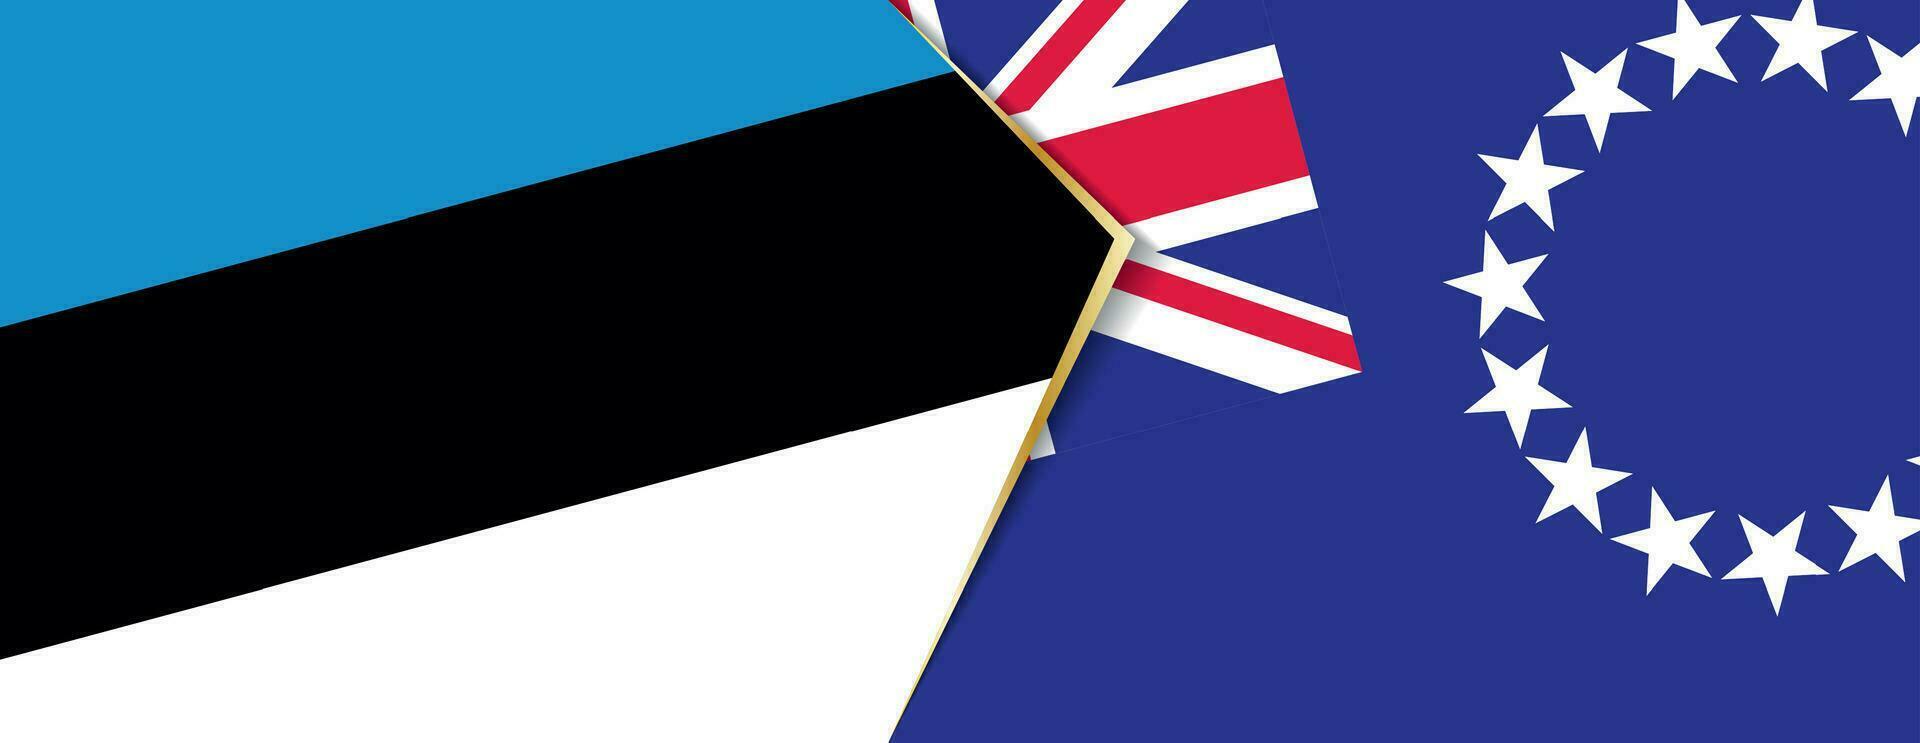 Estland und Koch Inseln Flaggen, zwei Vektor Flaggen.